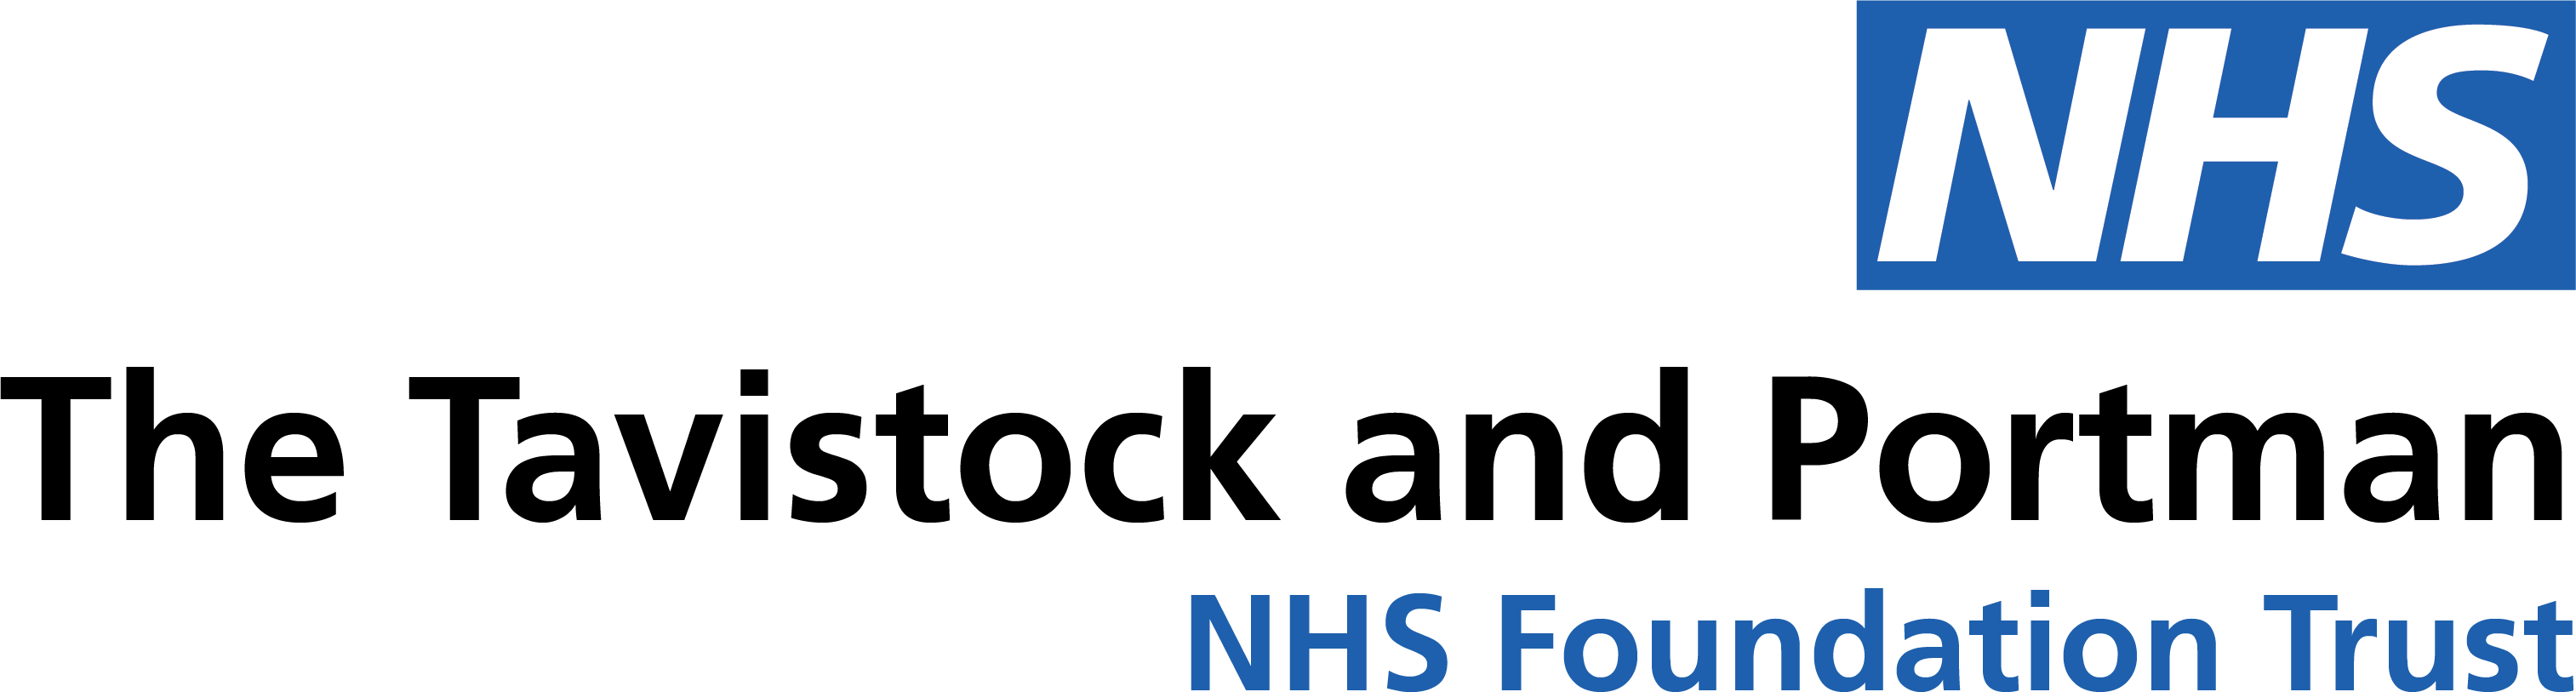 logo for Tavistock and Portman NHS Foundation Trust